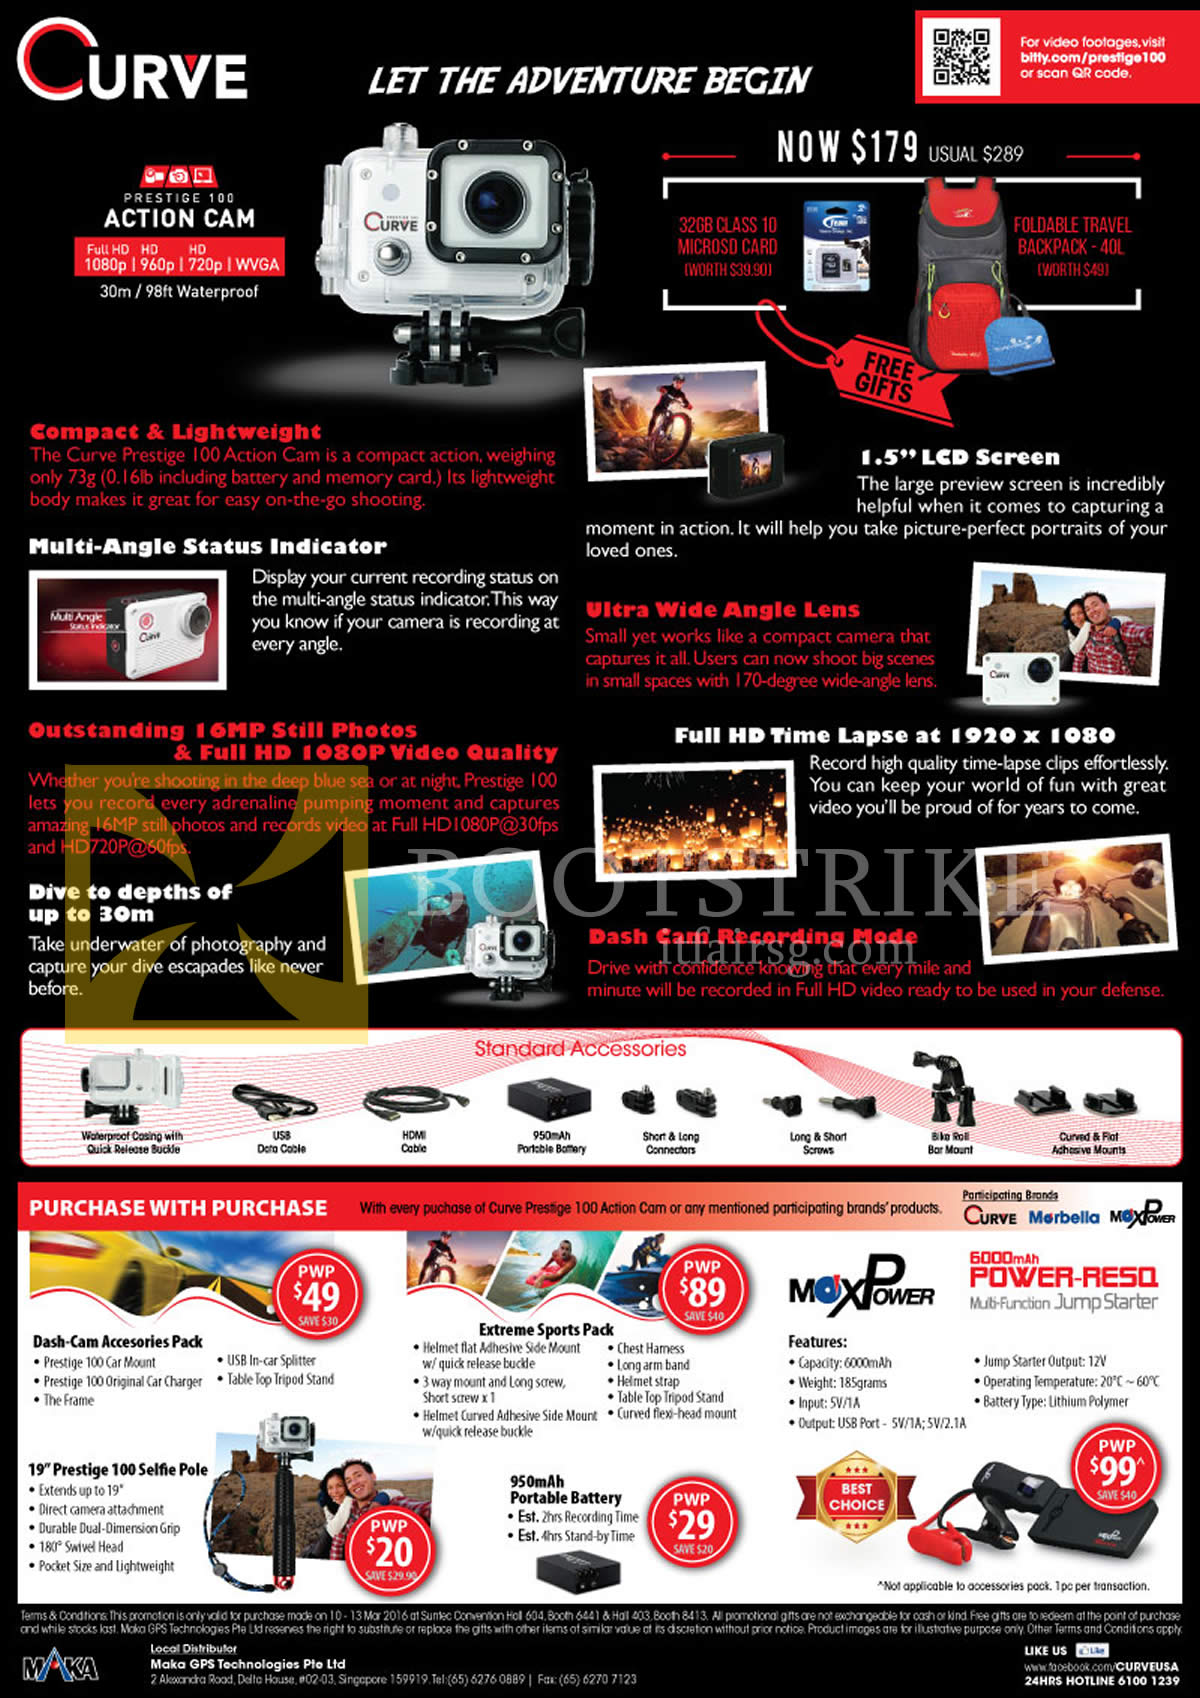 IT SHOW 2016 price list image brochure of Maka GPS Marbella Prestige 100 Action Cam, 6000mah Power RE50 Multi Function Jump Starter